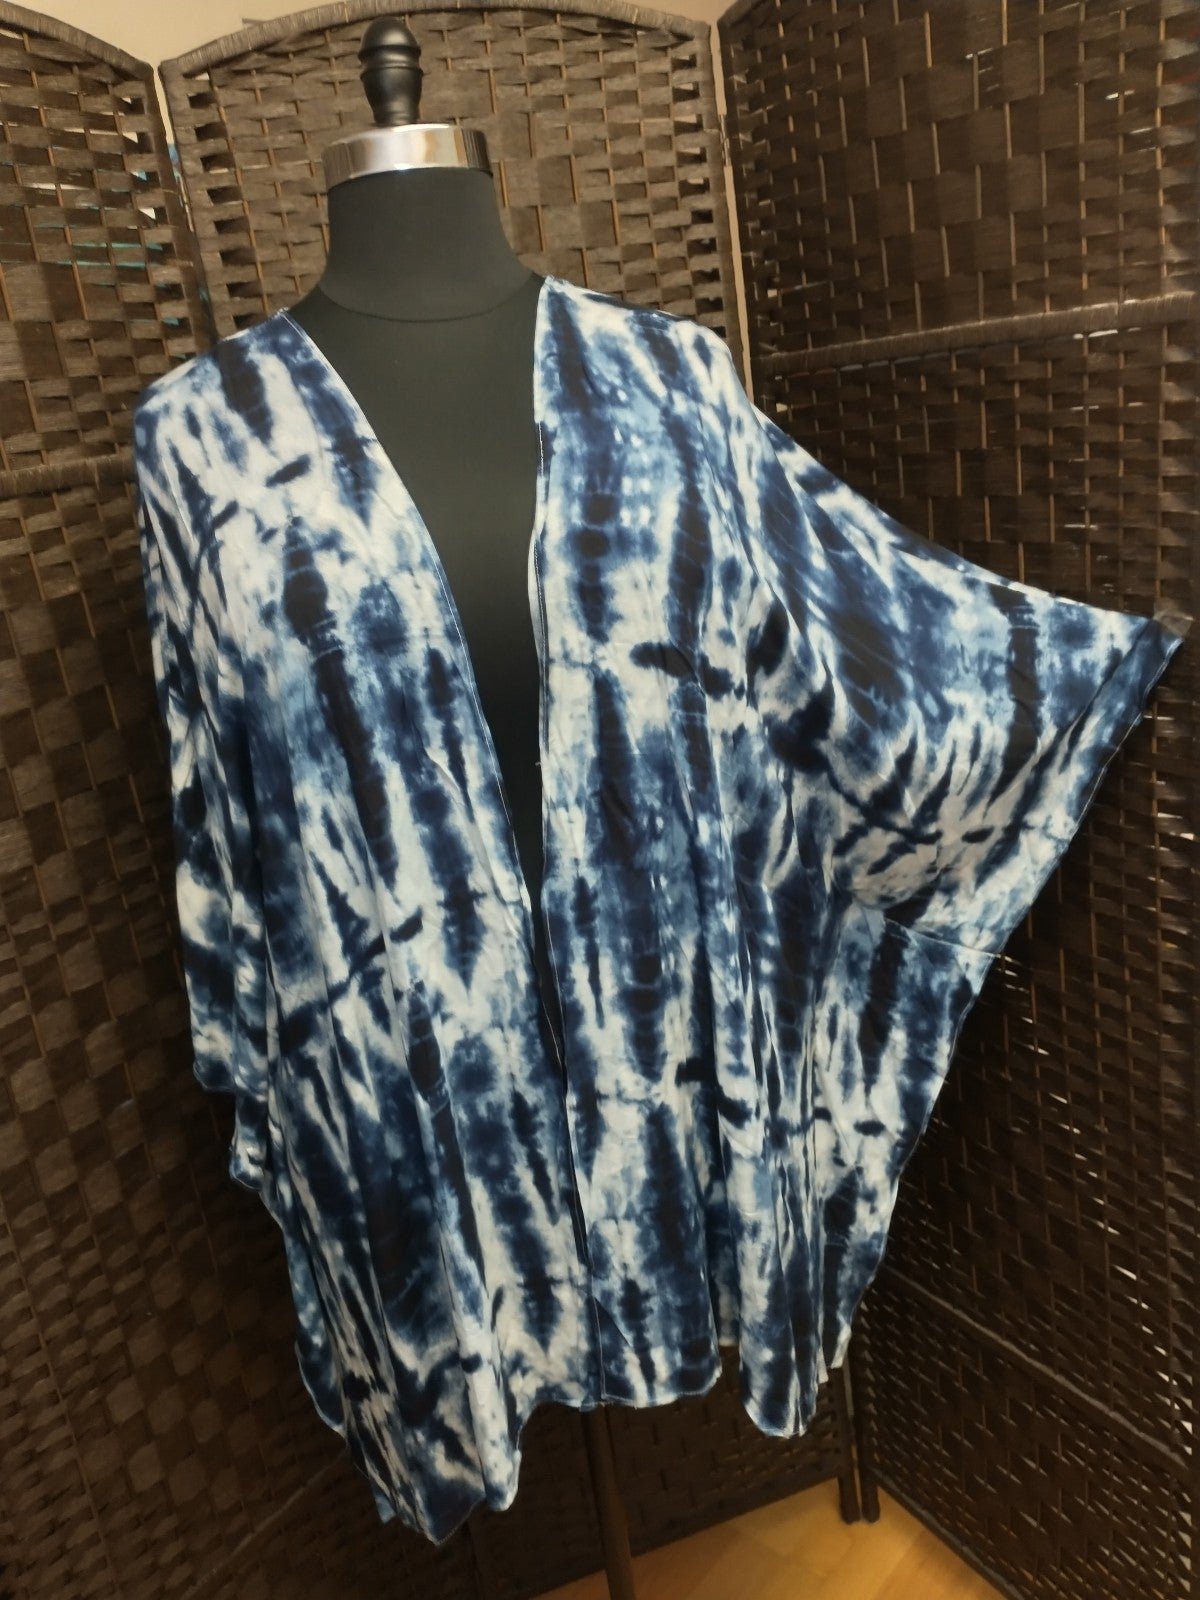 cheapest place to buy  One Size NWT Kimono Blue/Navy/White Tie Dye KjAdS6Ly1 Wholesale